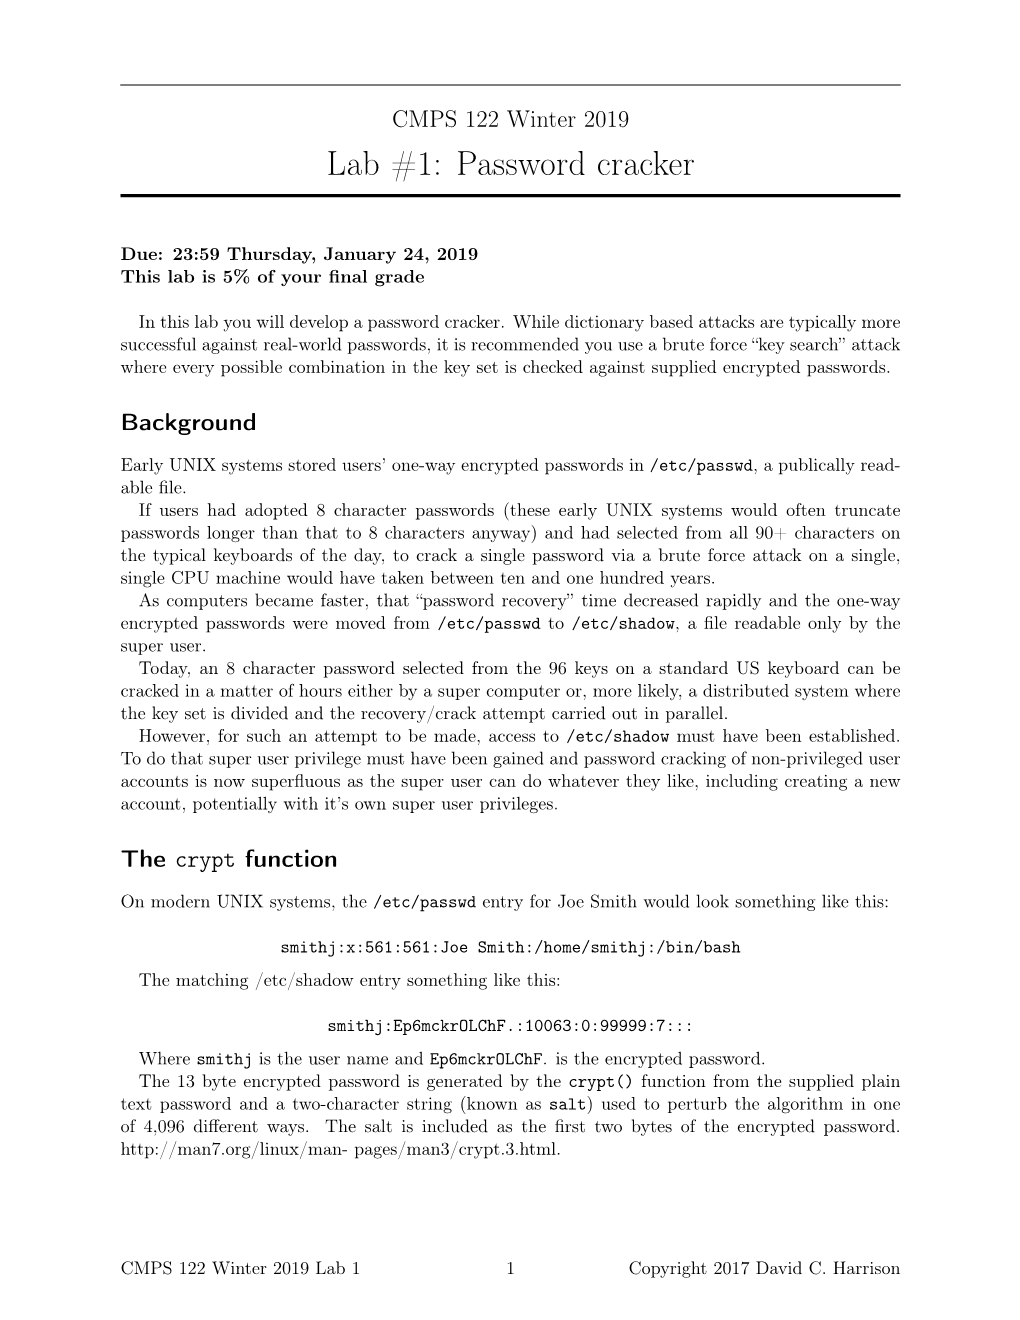 Lab #1: Password Cracker